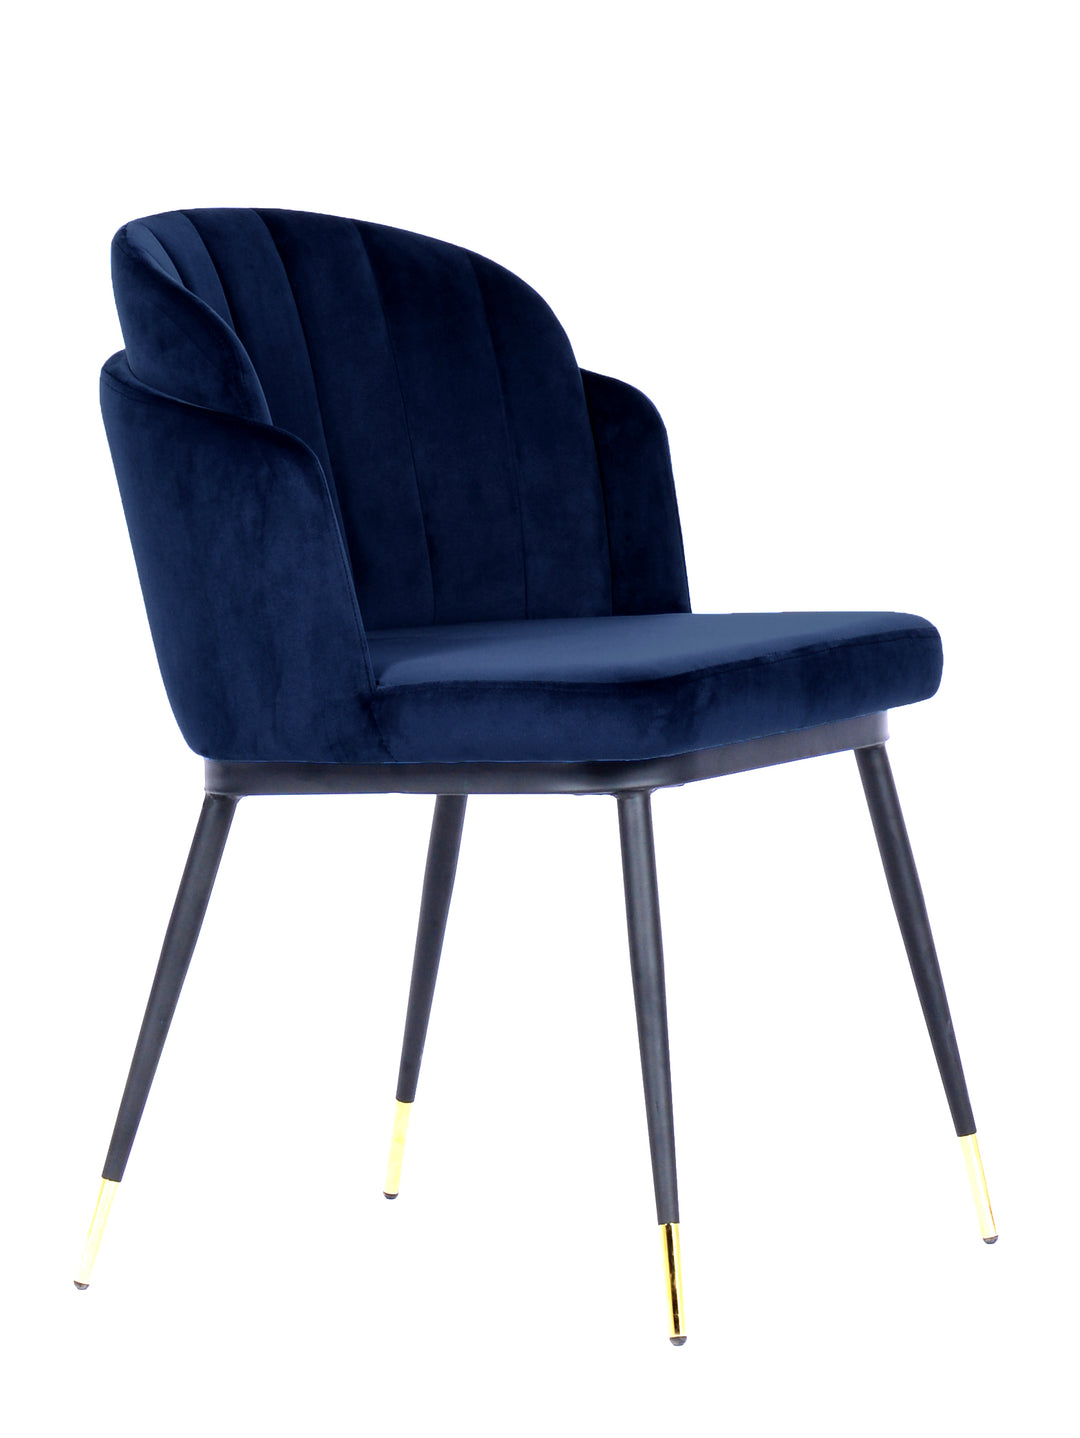 Talulah Dining Chair Navy Velvet - Future Classics Furniture